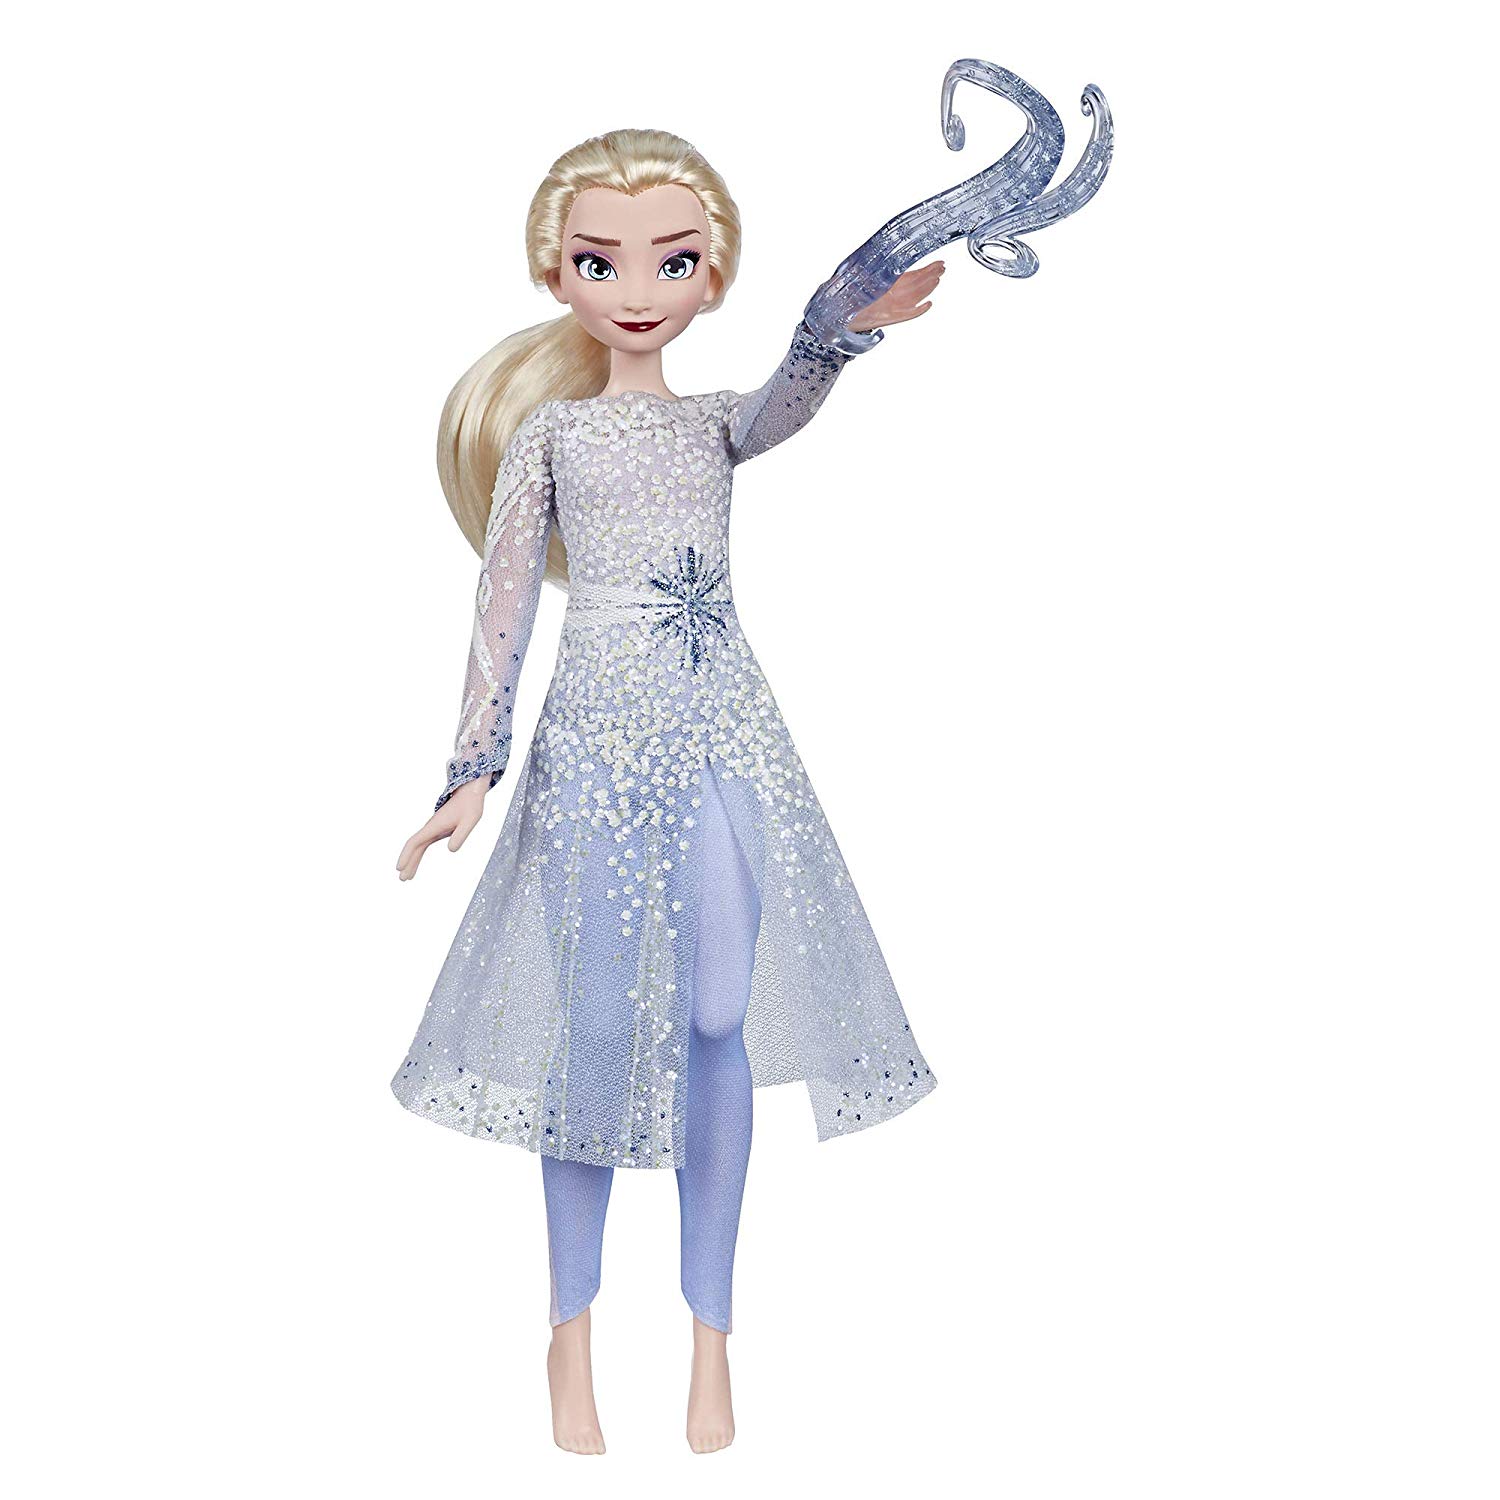 Кукла со звуковыми и световыми эффектами Холодное Сердце 2: Эльза (Frozen Magical Discovery Elsa Doll with Lights and Sounds, Toy for Kids Inspired 2 Movie)